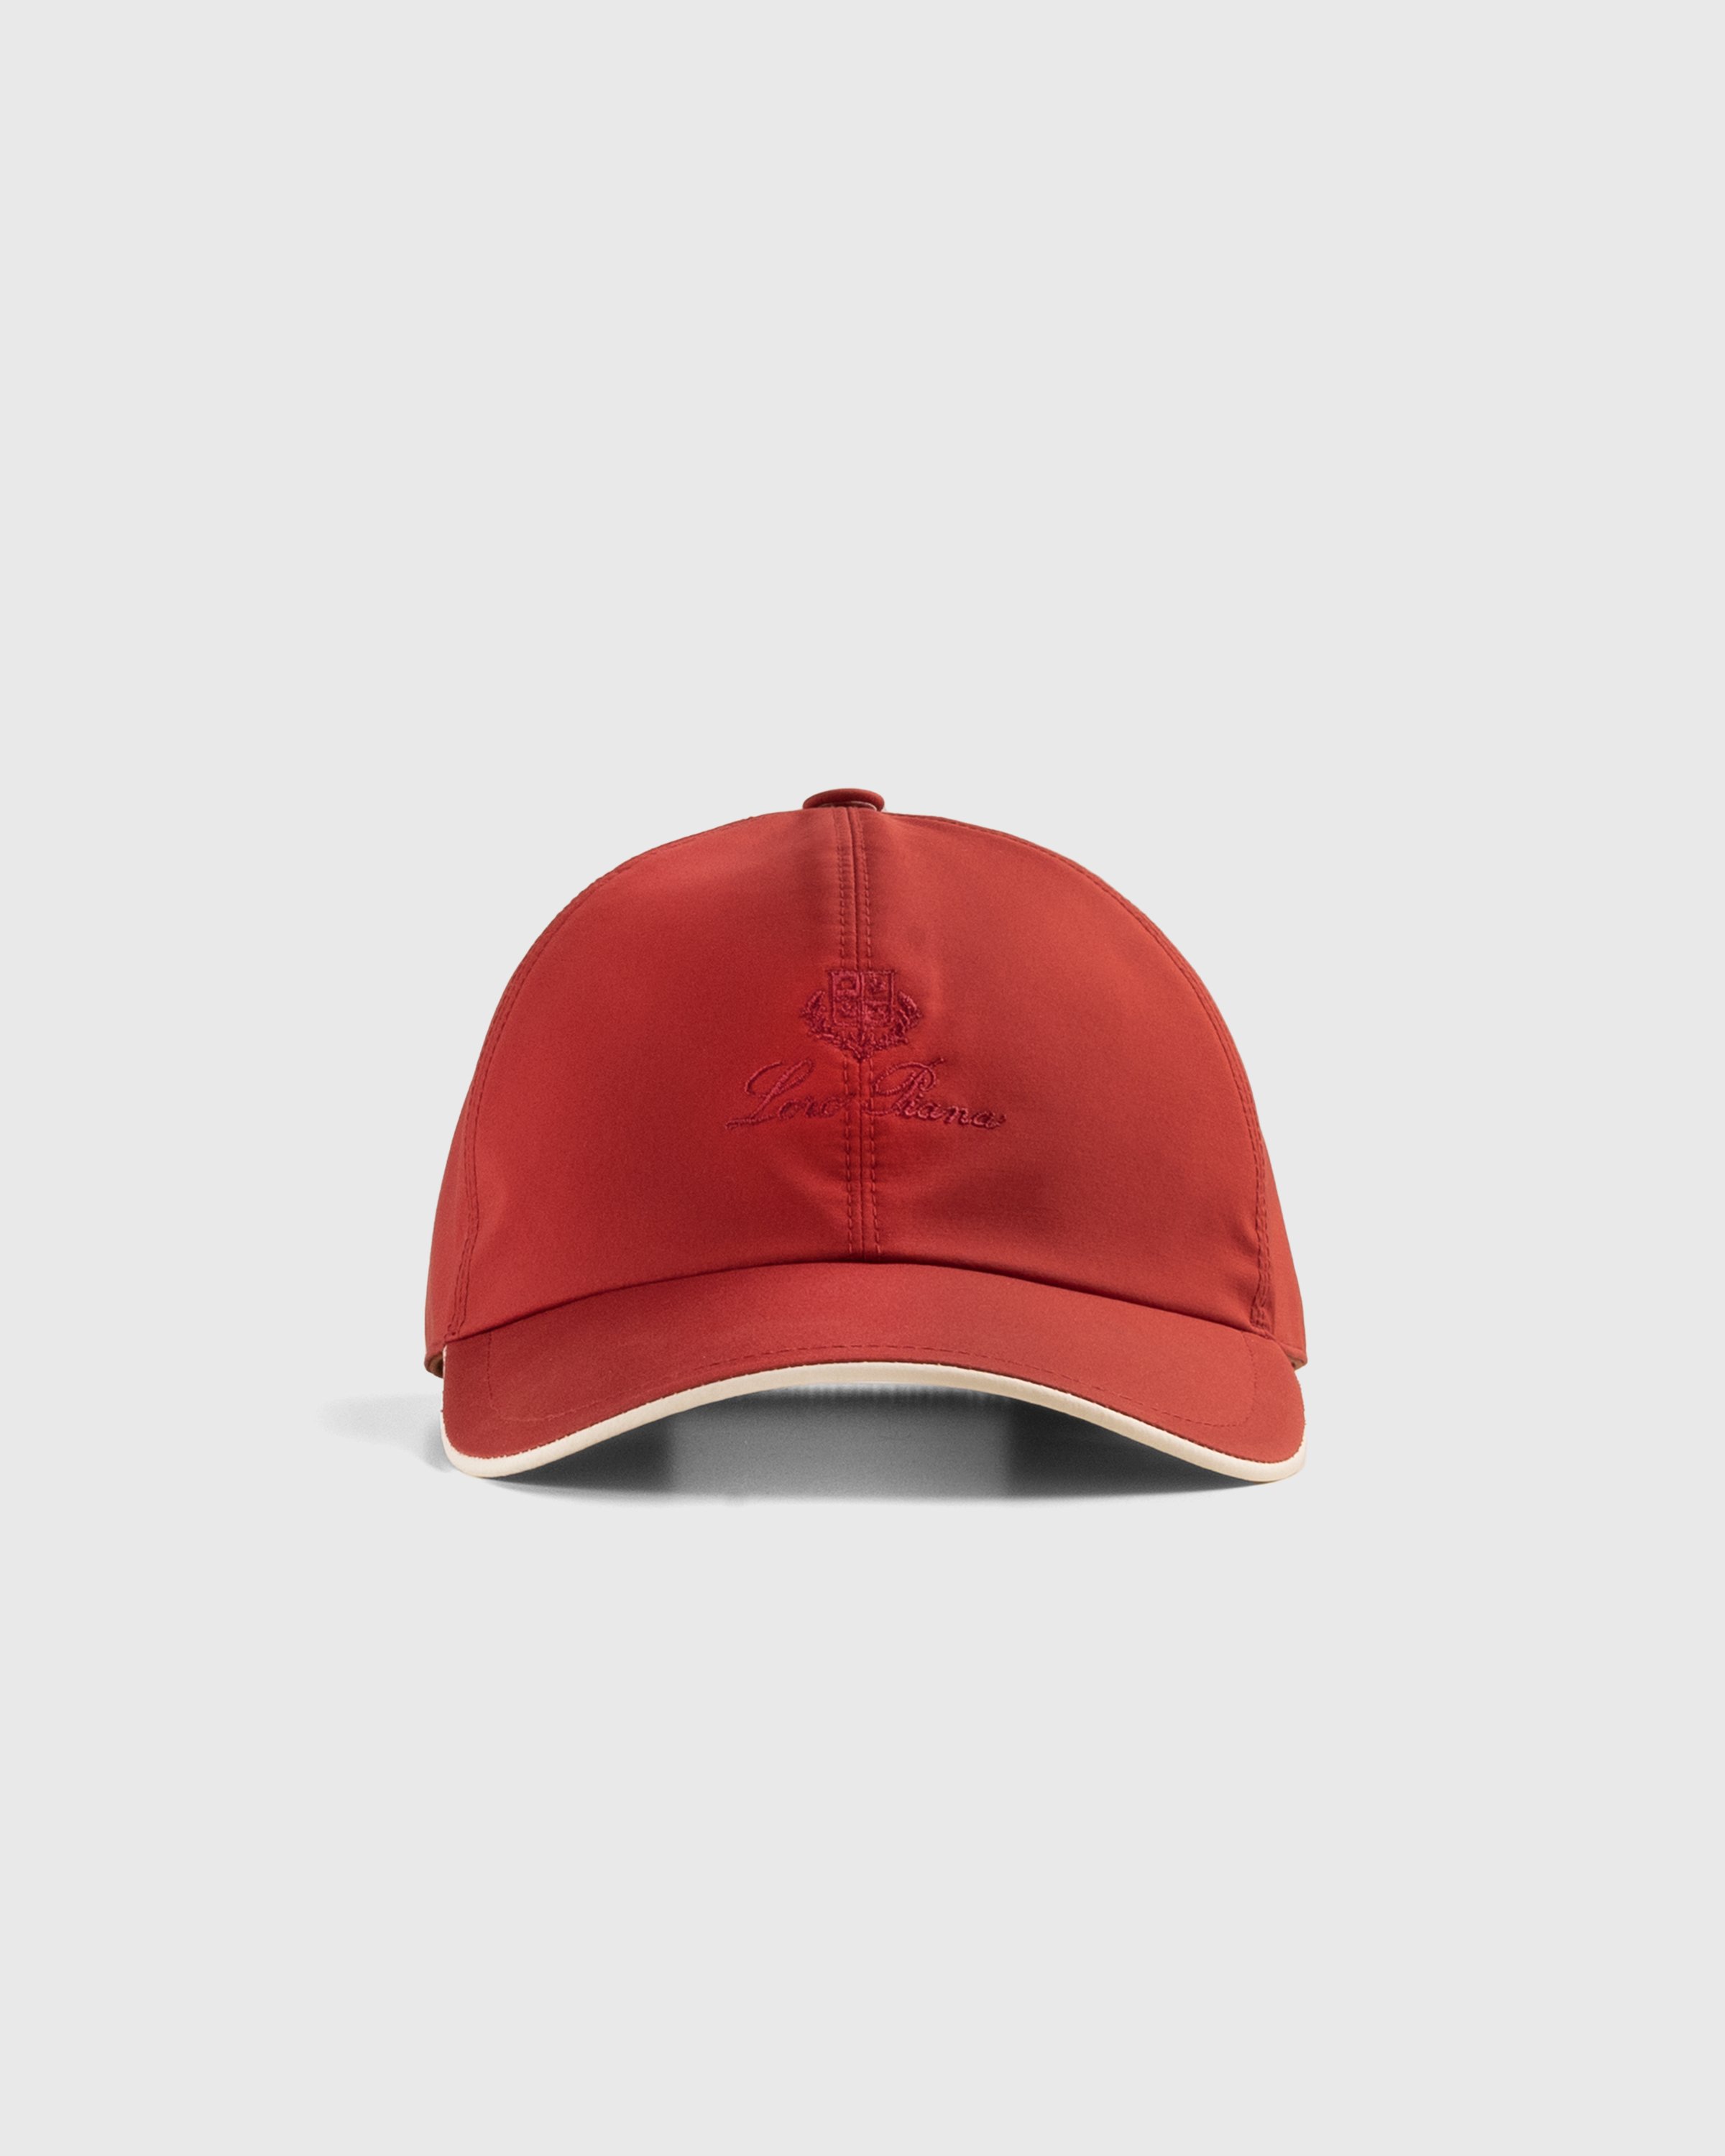 Loro Piana - Bicolor Baseball Cap Hibiscus / Ivory - Accessories - Red - Image 2